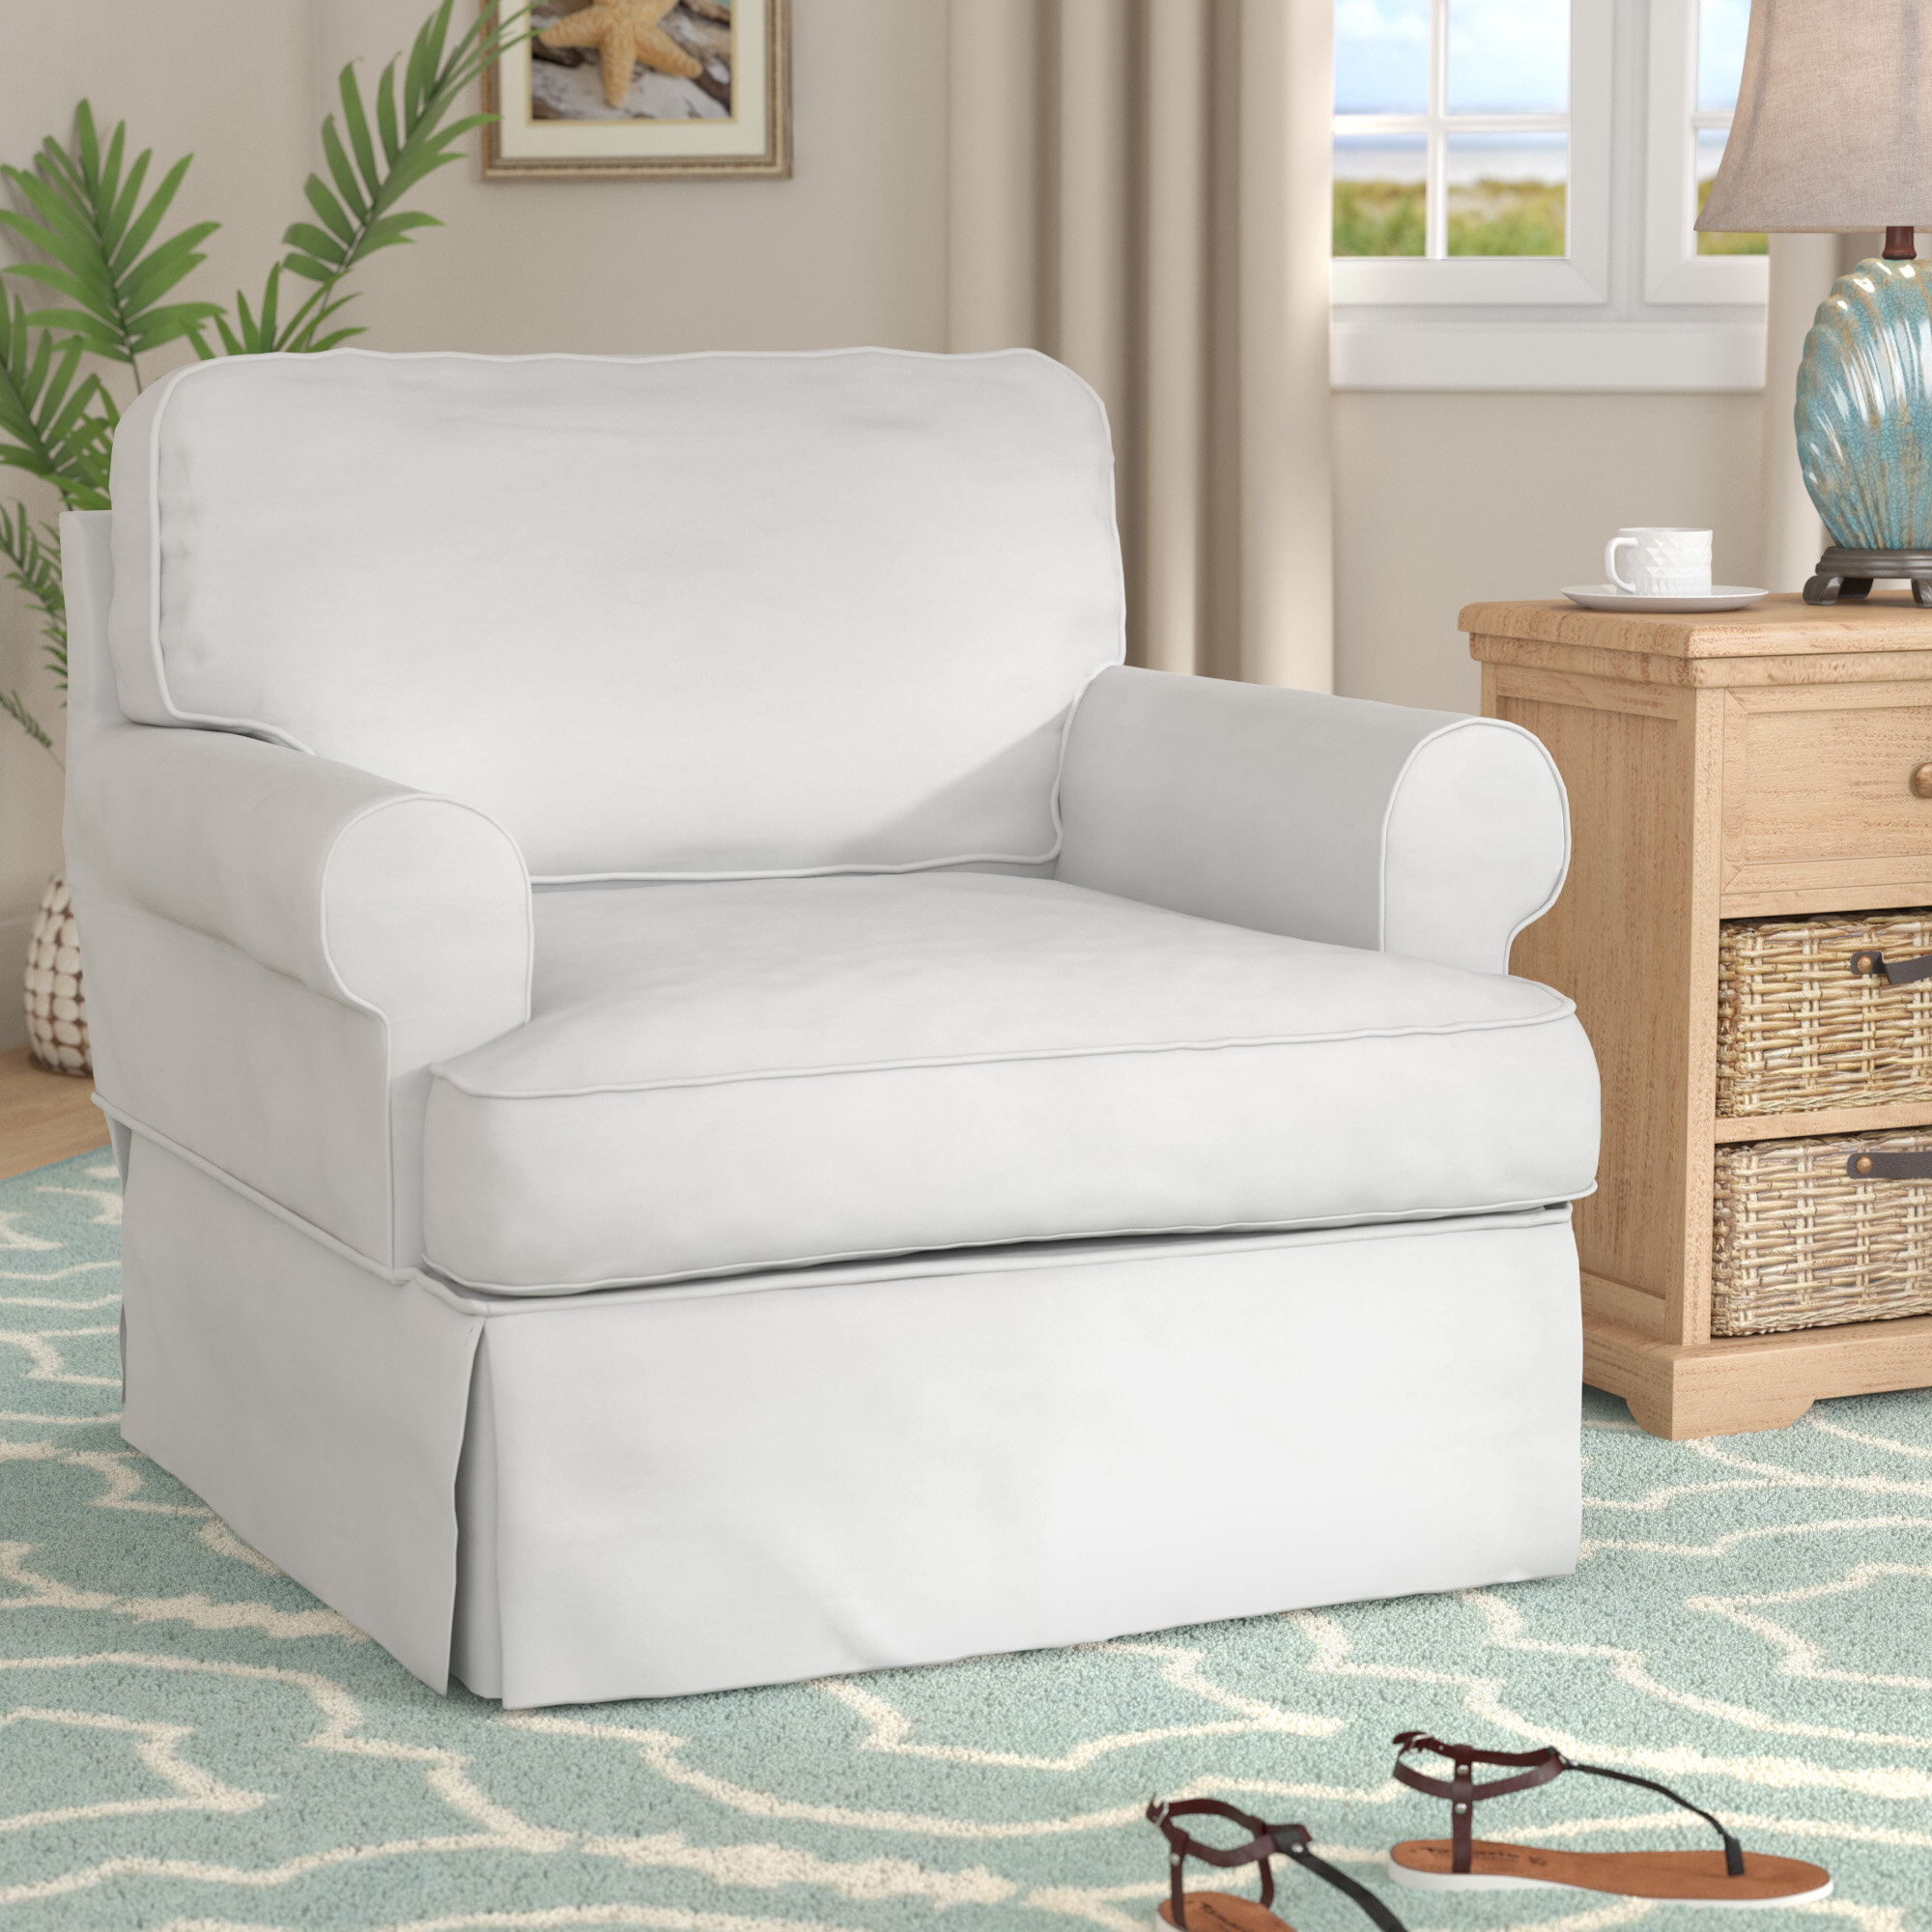 t cushion chair slipcover gray